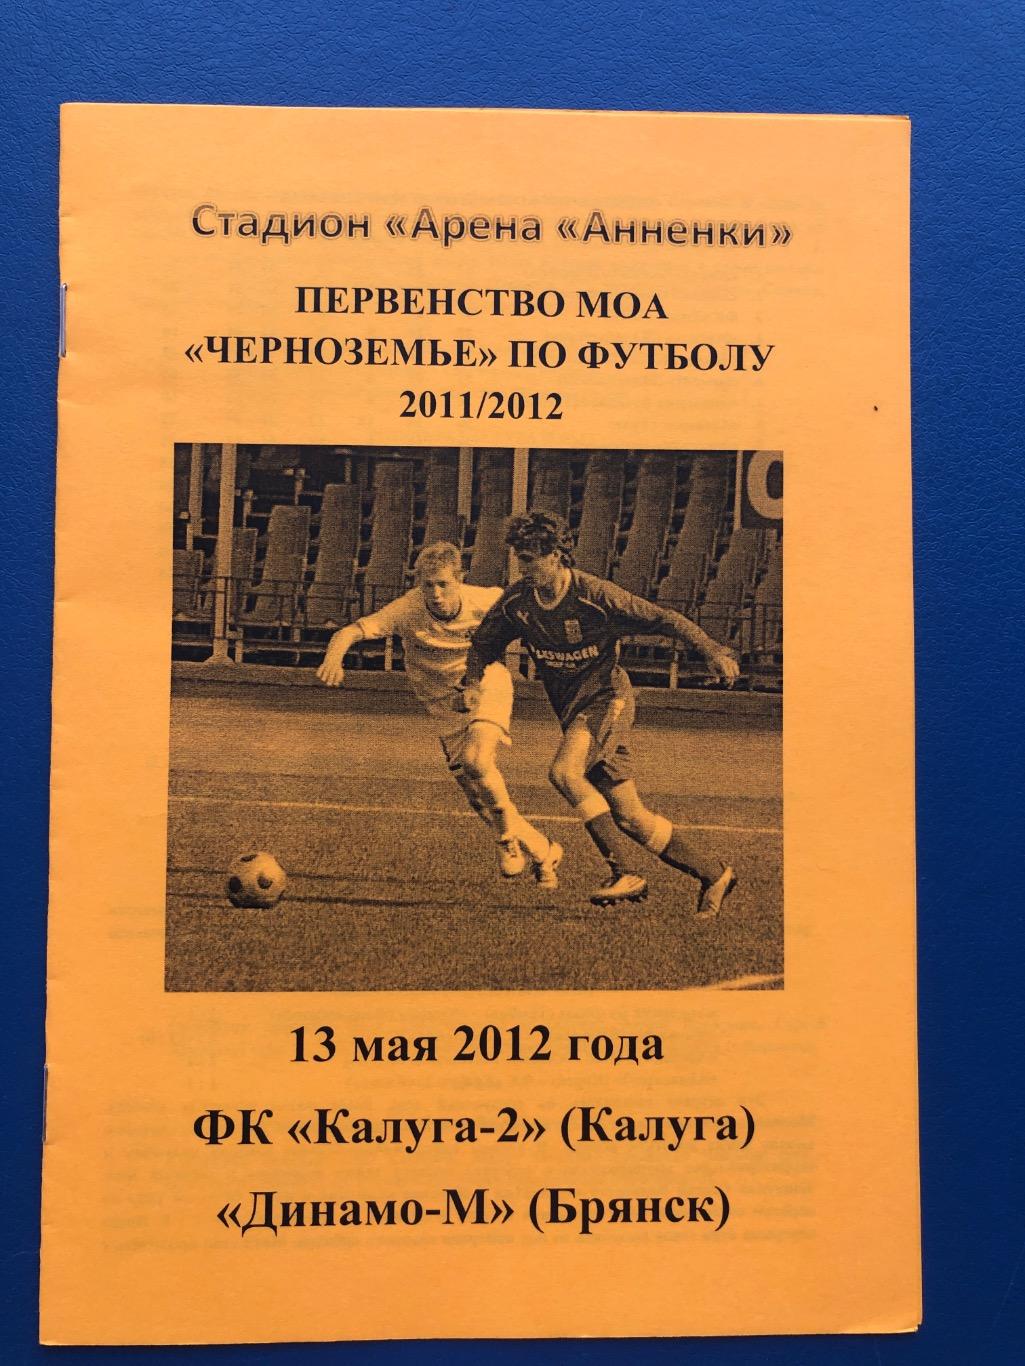 Калуга-2 - Динамо М Брянск 13 мая 2012